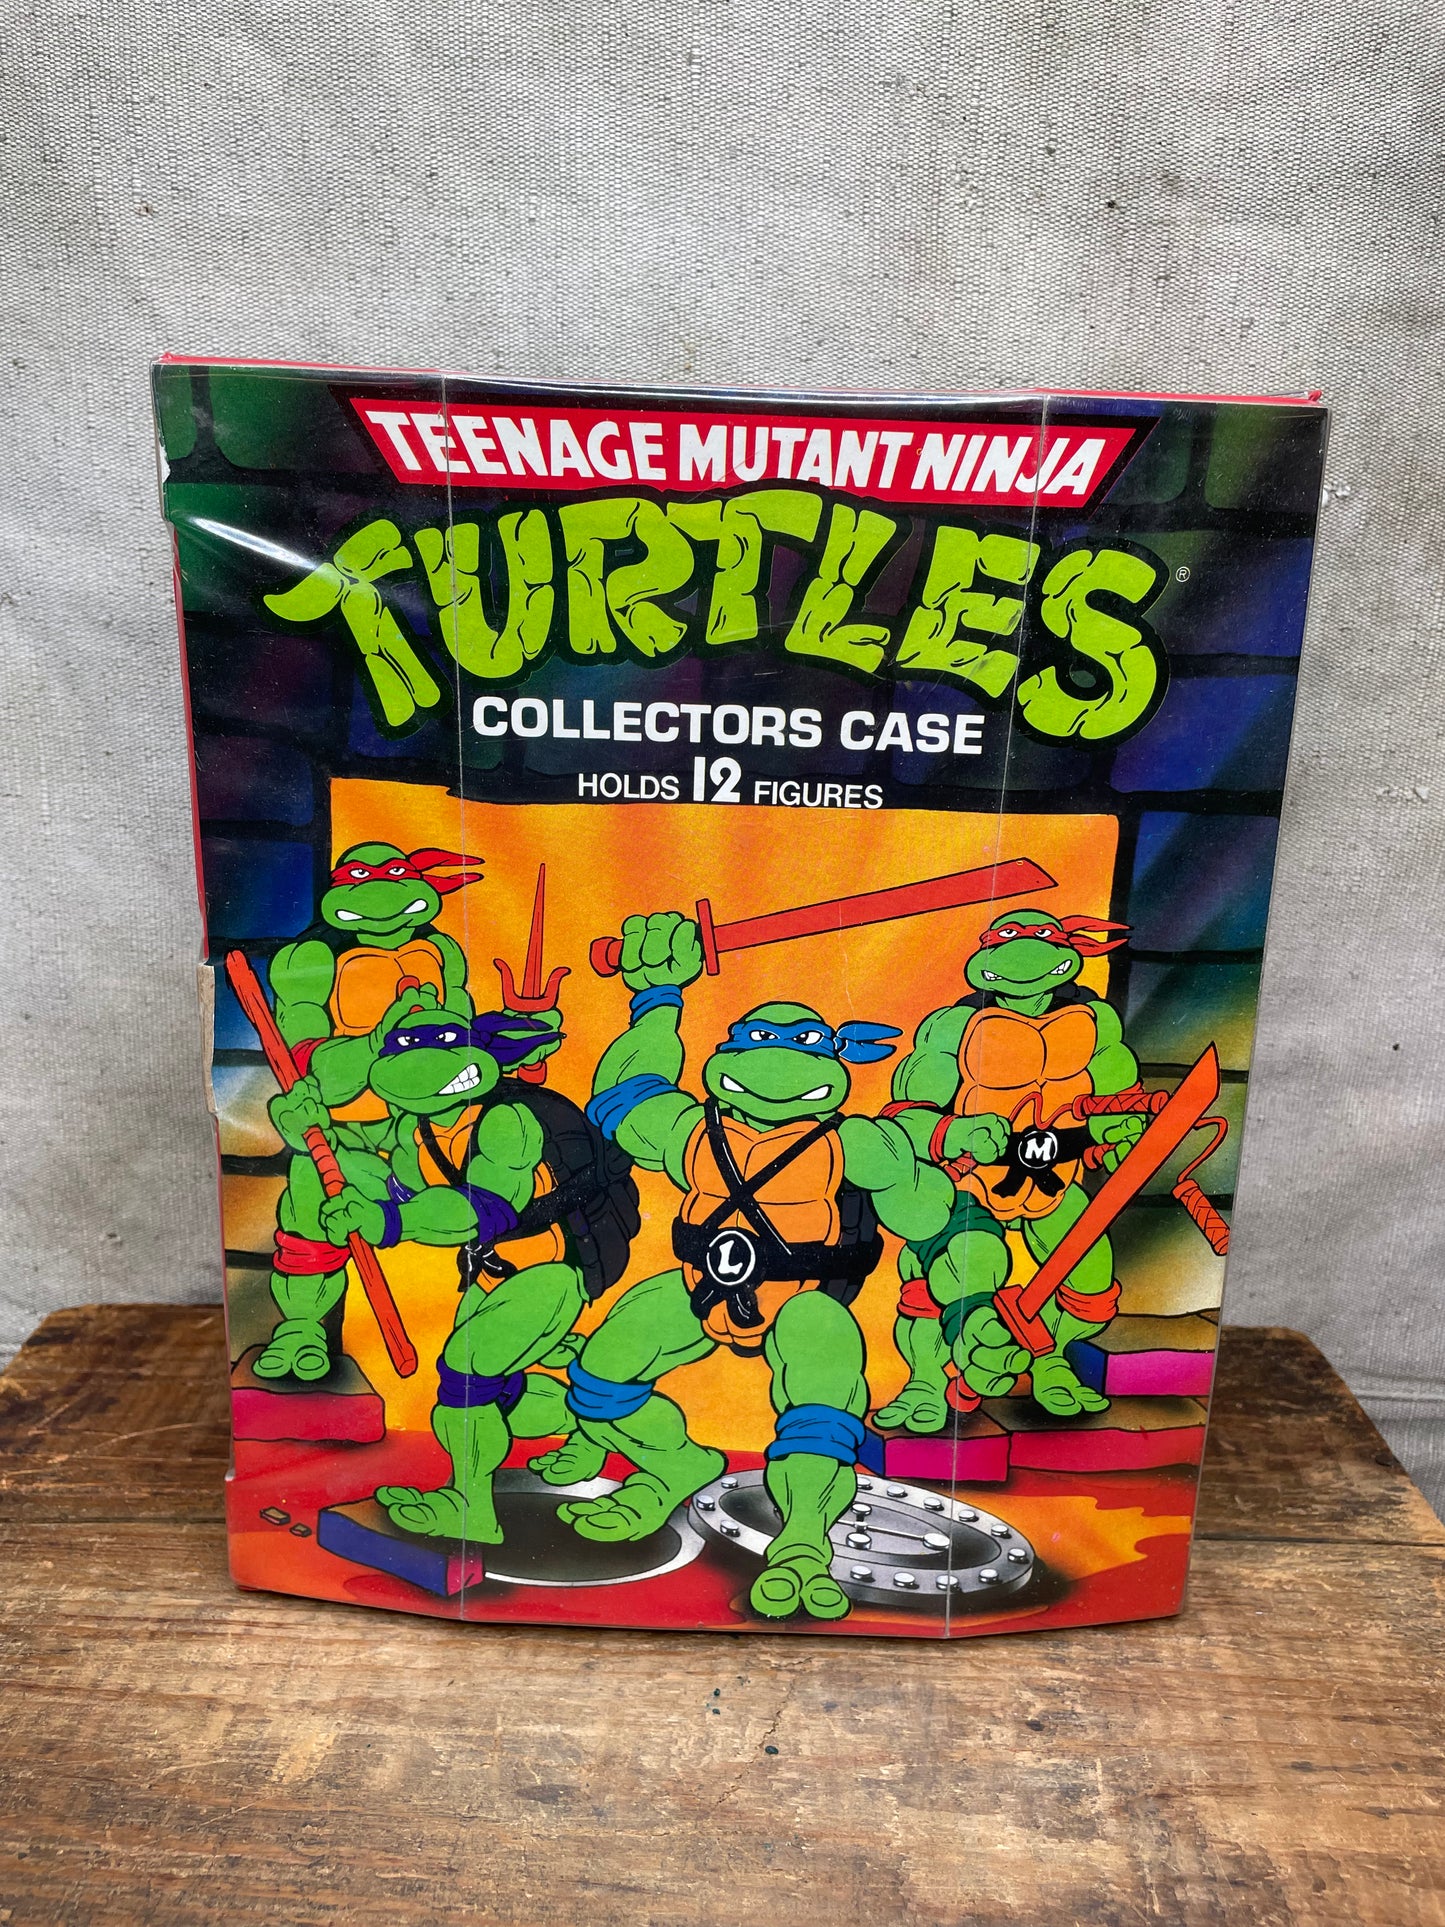 Vintage Teenage Mutant Ninja Turtles Action Figure Carrying Case